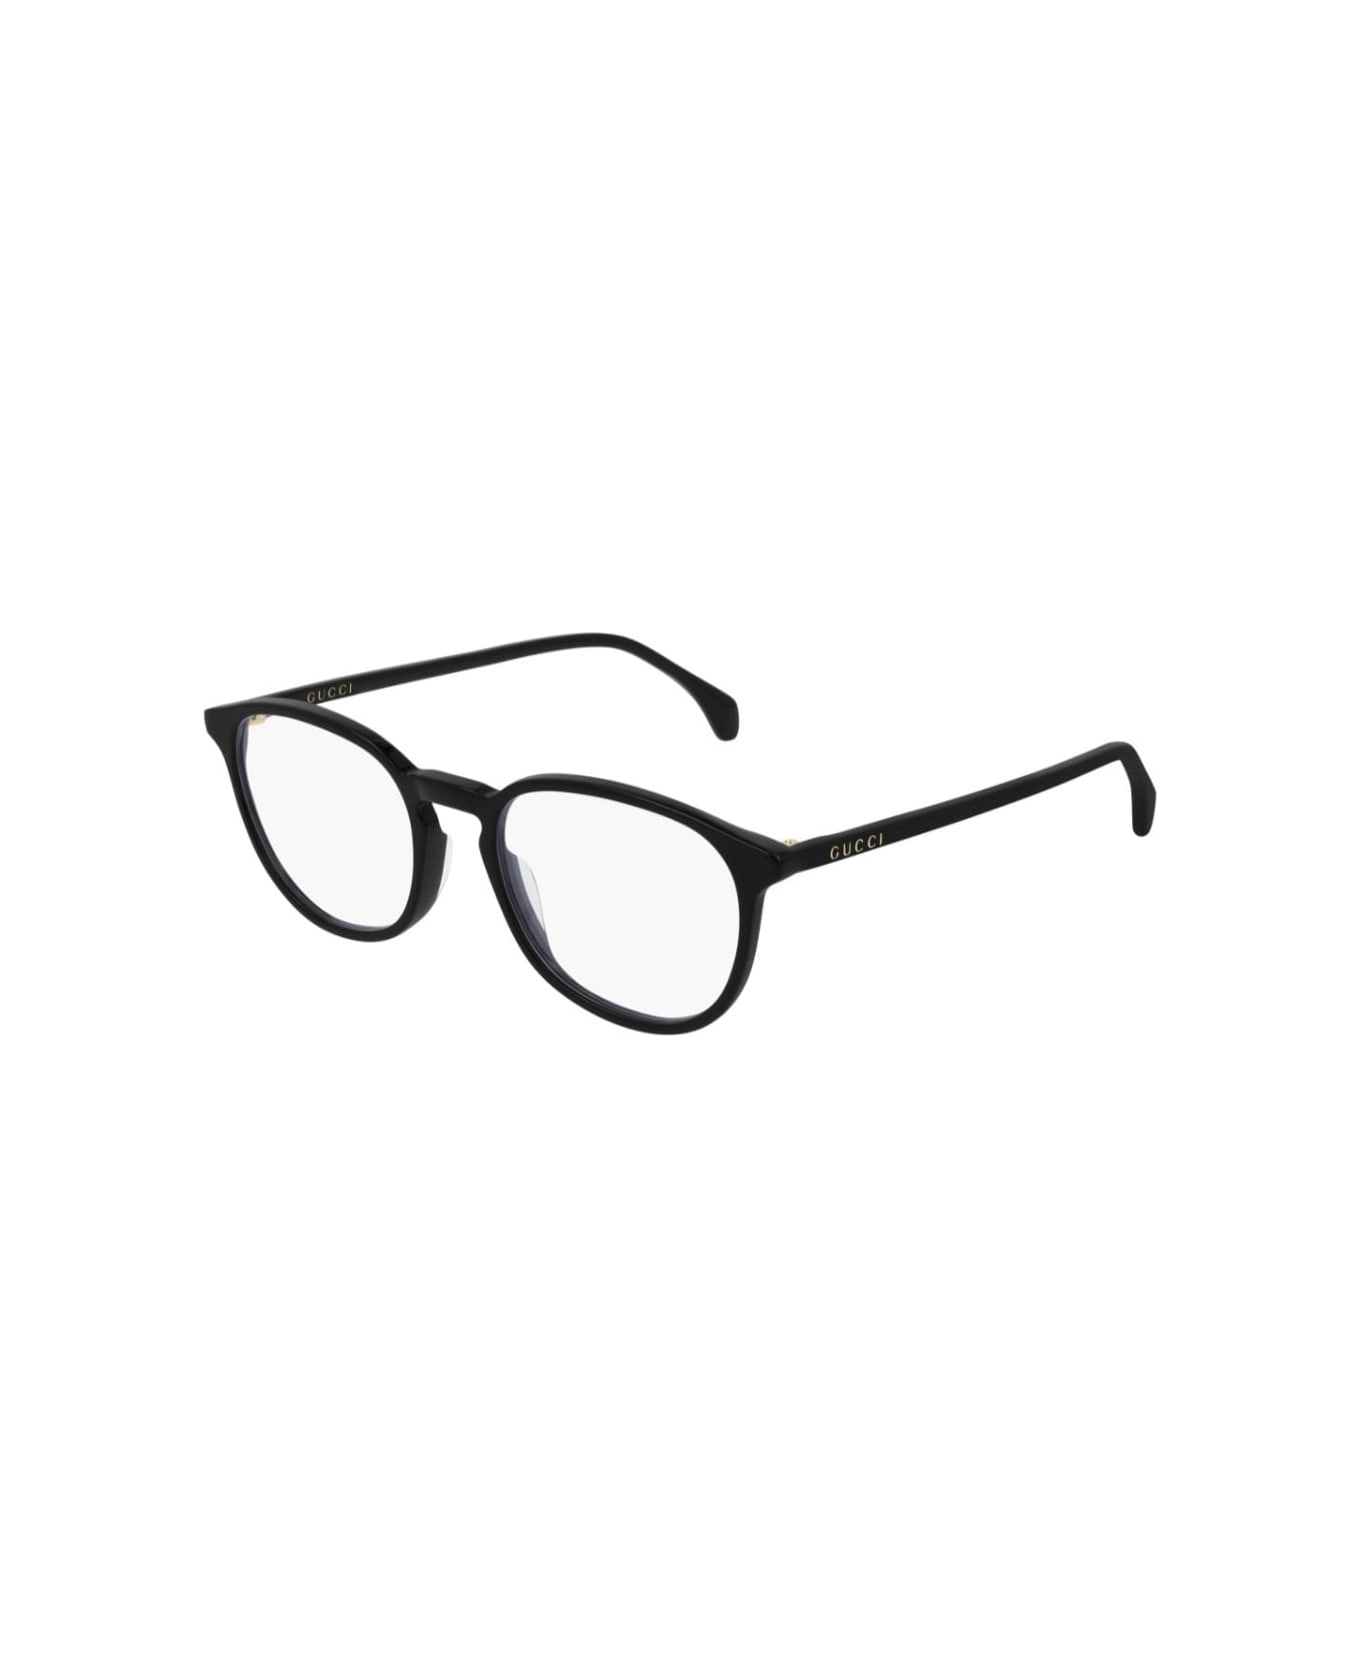 Gucci Eyewear GG0551 001 Glasses - Nero